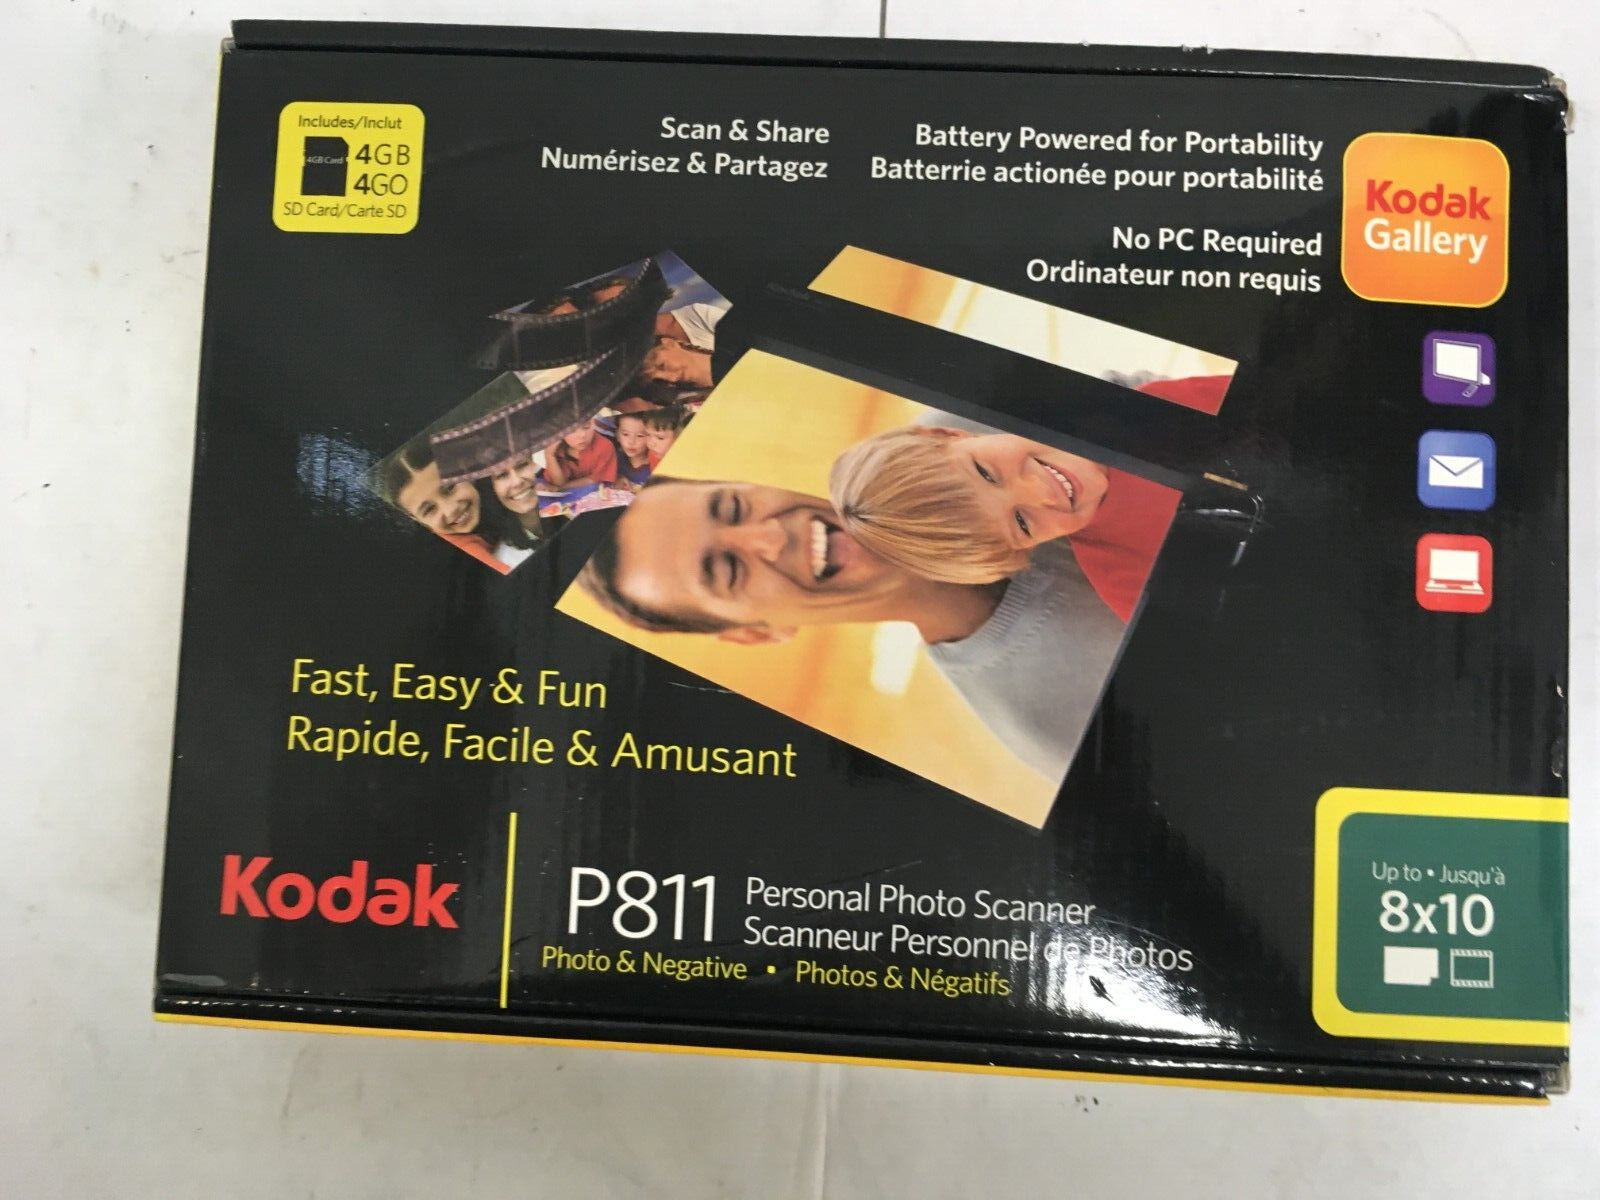 Kodak P811 Handheld Scanner Personal Photo Scanner, open box - $33.68